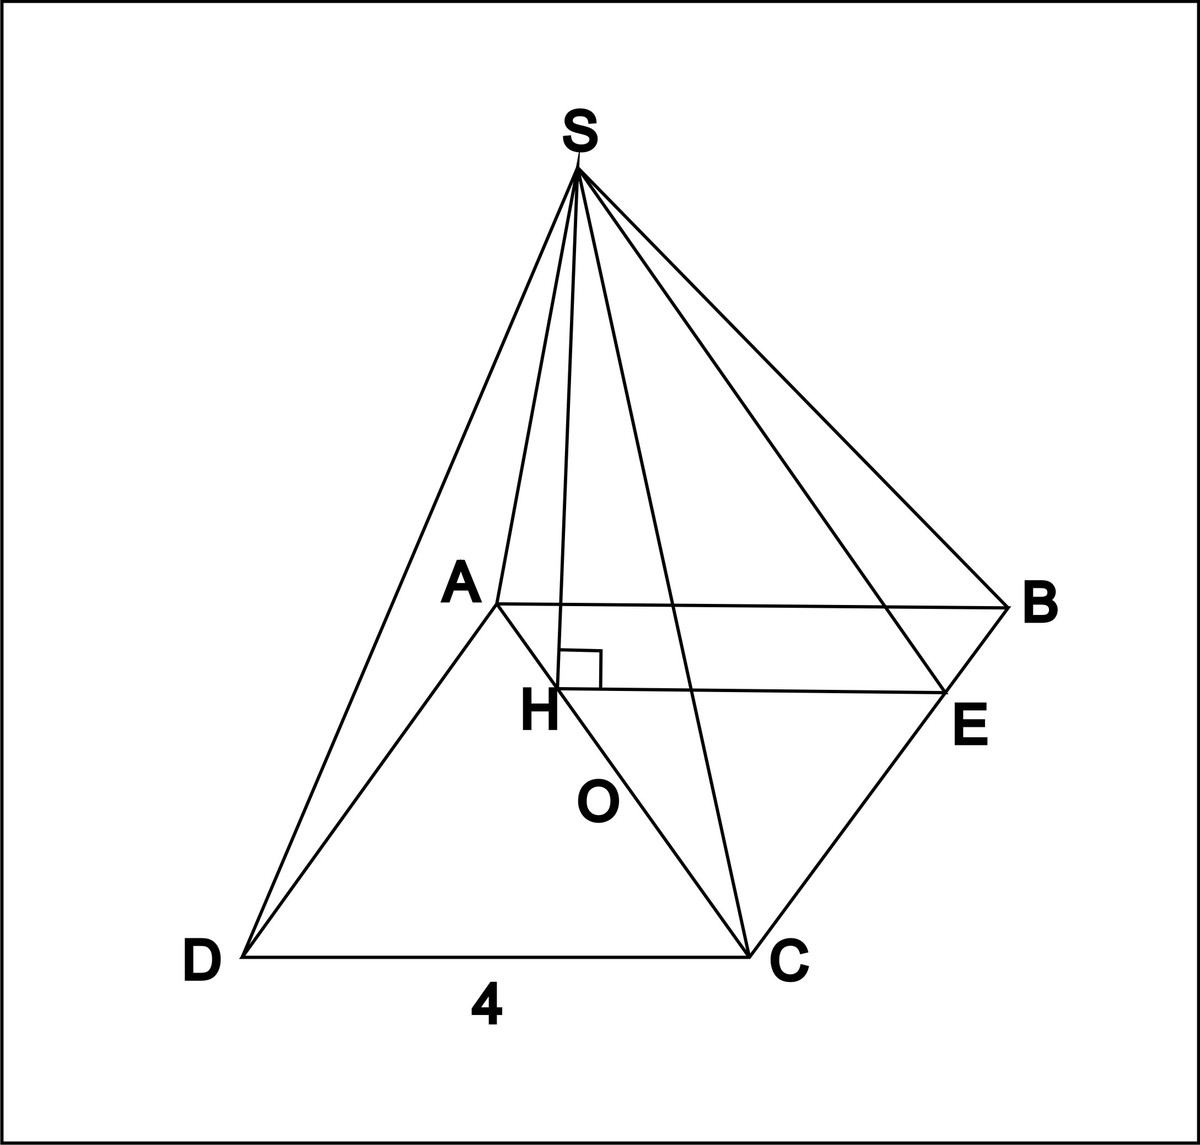 SABCD пирамида ABCD квадрат ab 4 sh высота